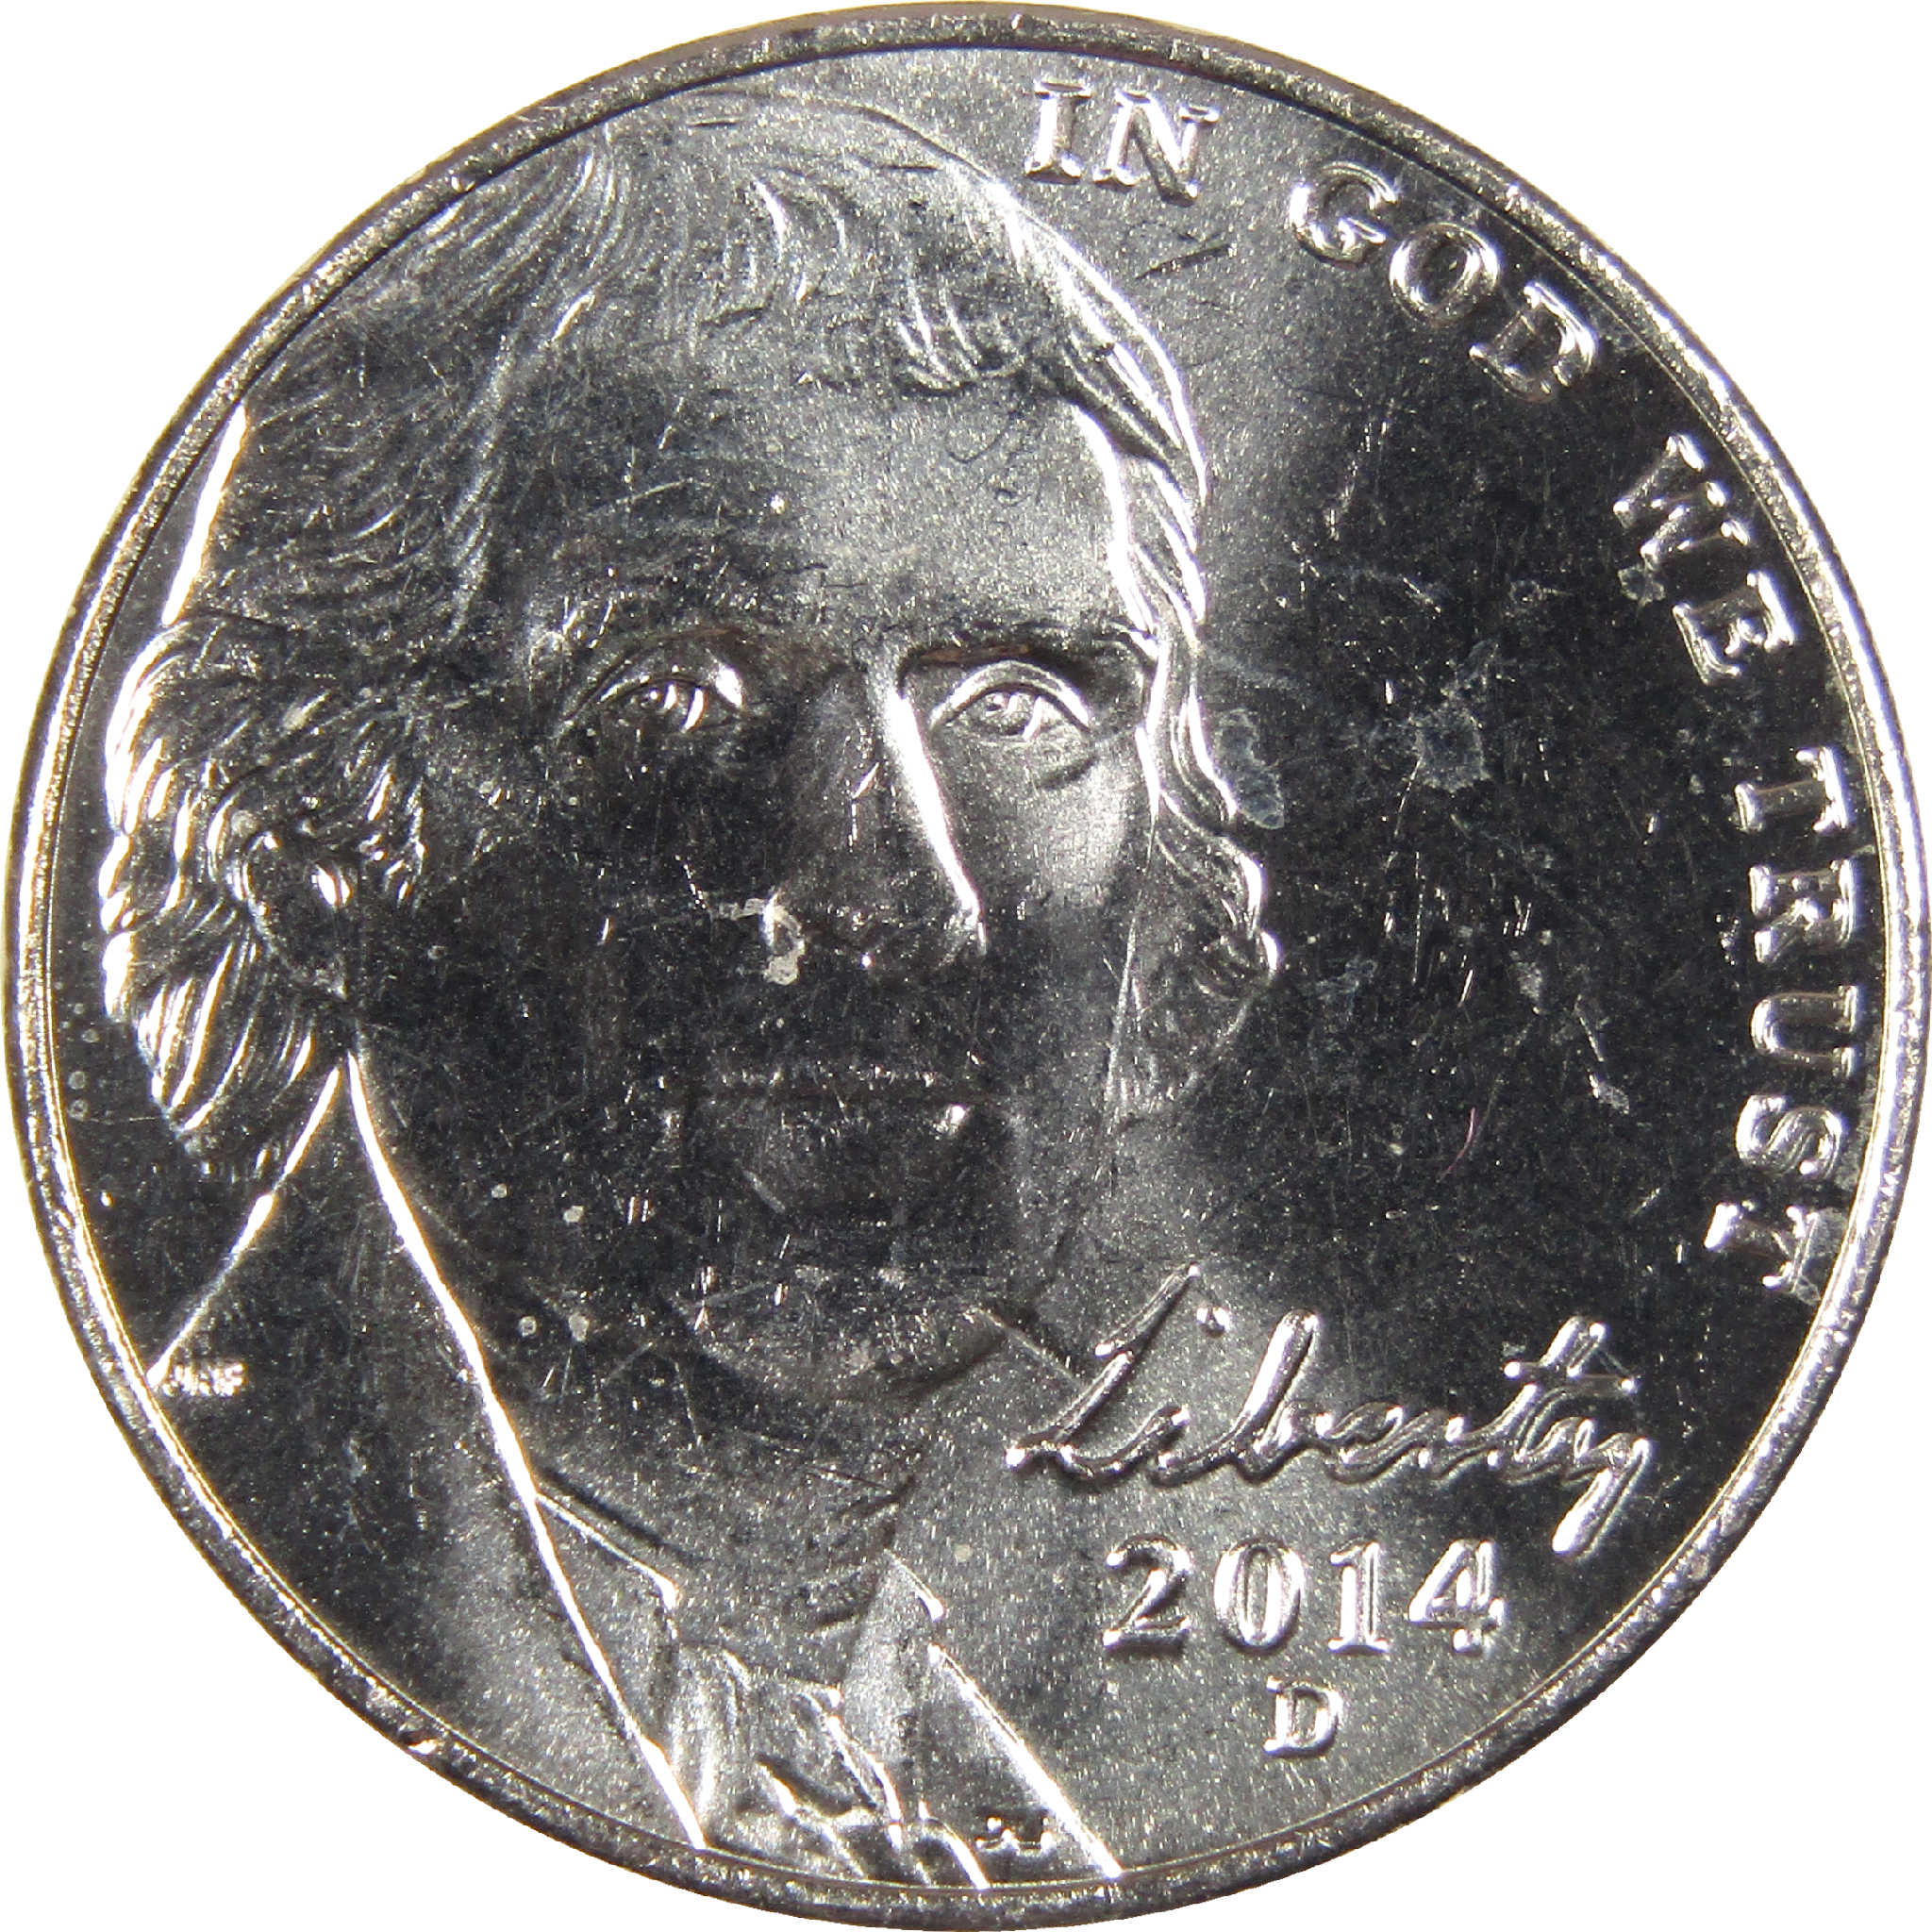 2014 D Jefferson Nickel Uncirculated 5c Coin